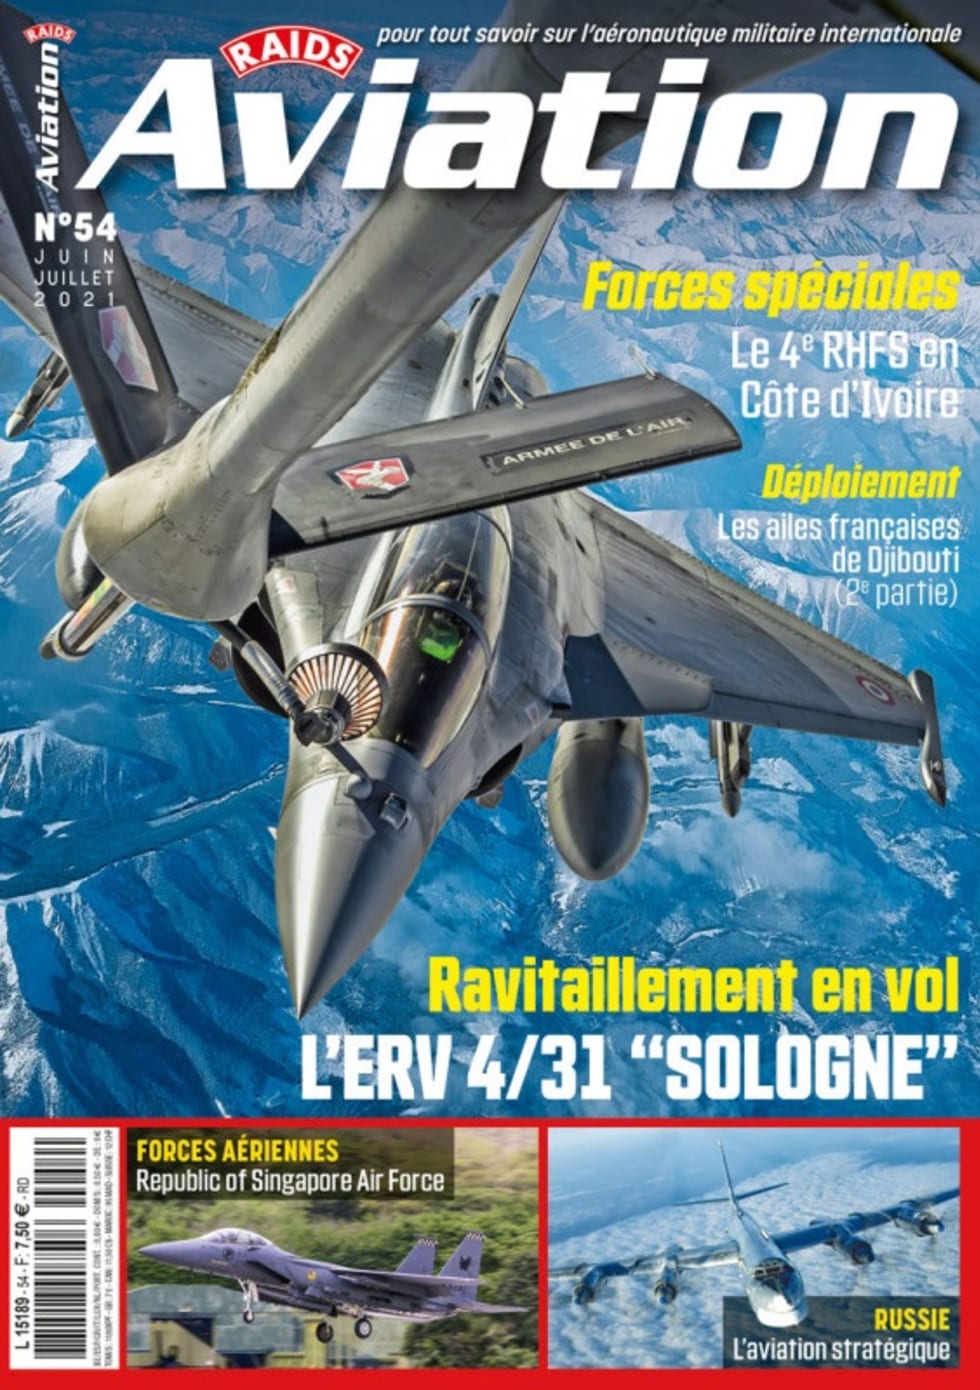 RAIDS Aviation n54 magazine cover